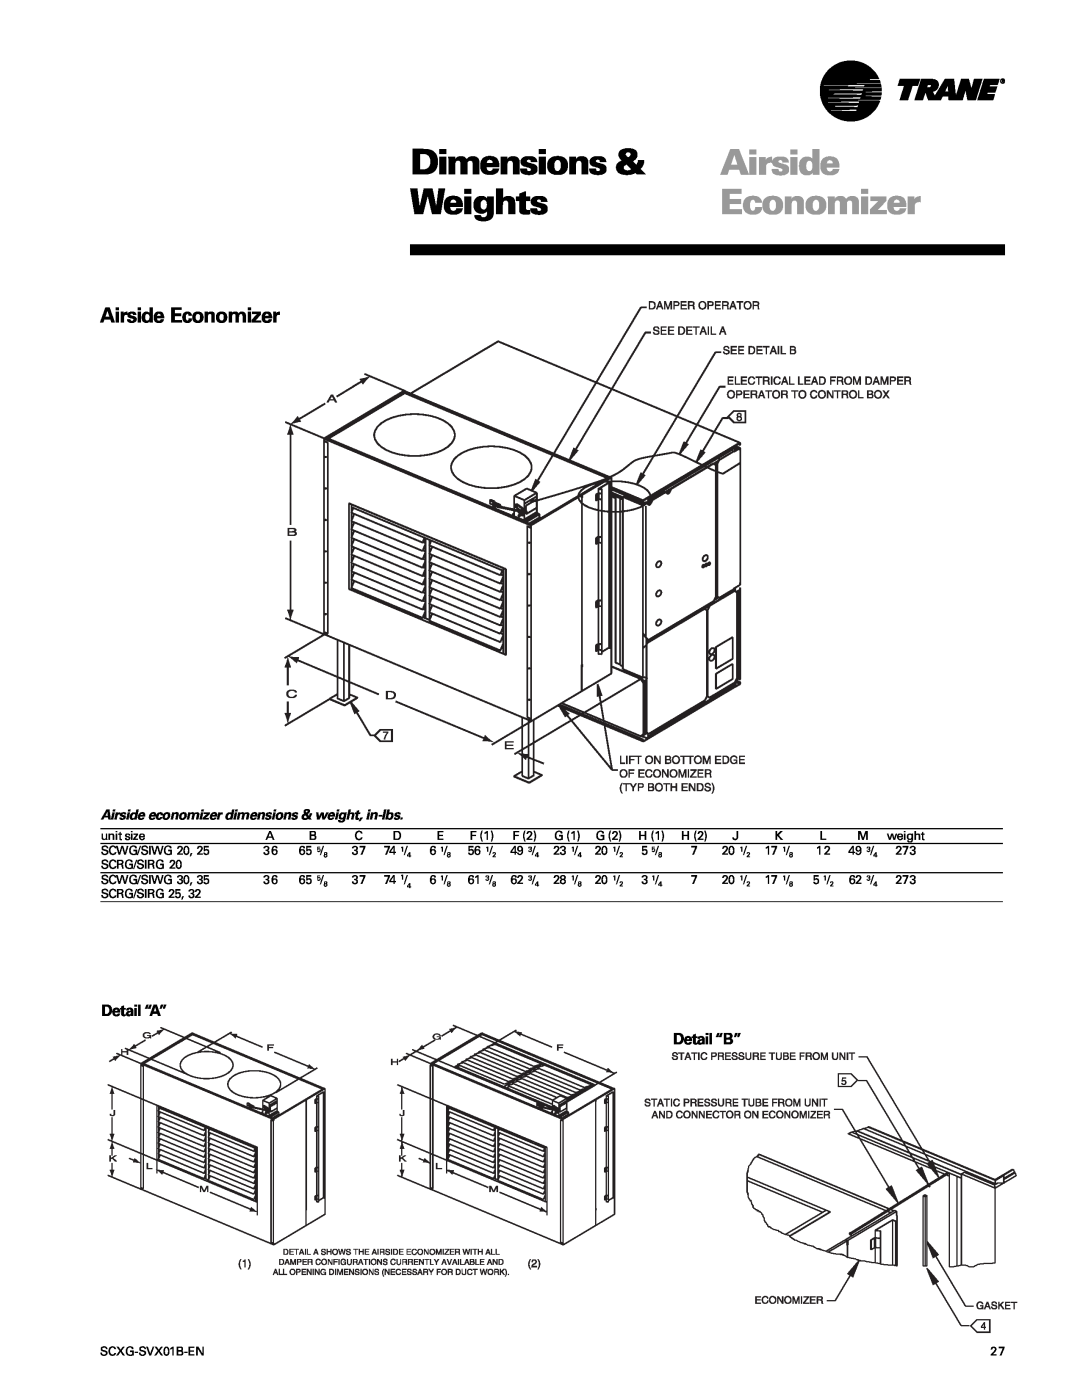 Trane SCXG-SVX01B-EN manual Airside Economizer, Dimensions, Weights, Detail “A” Detail “B” 